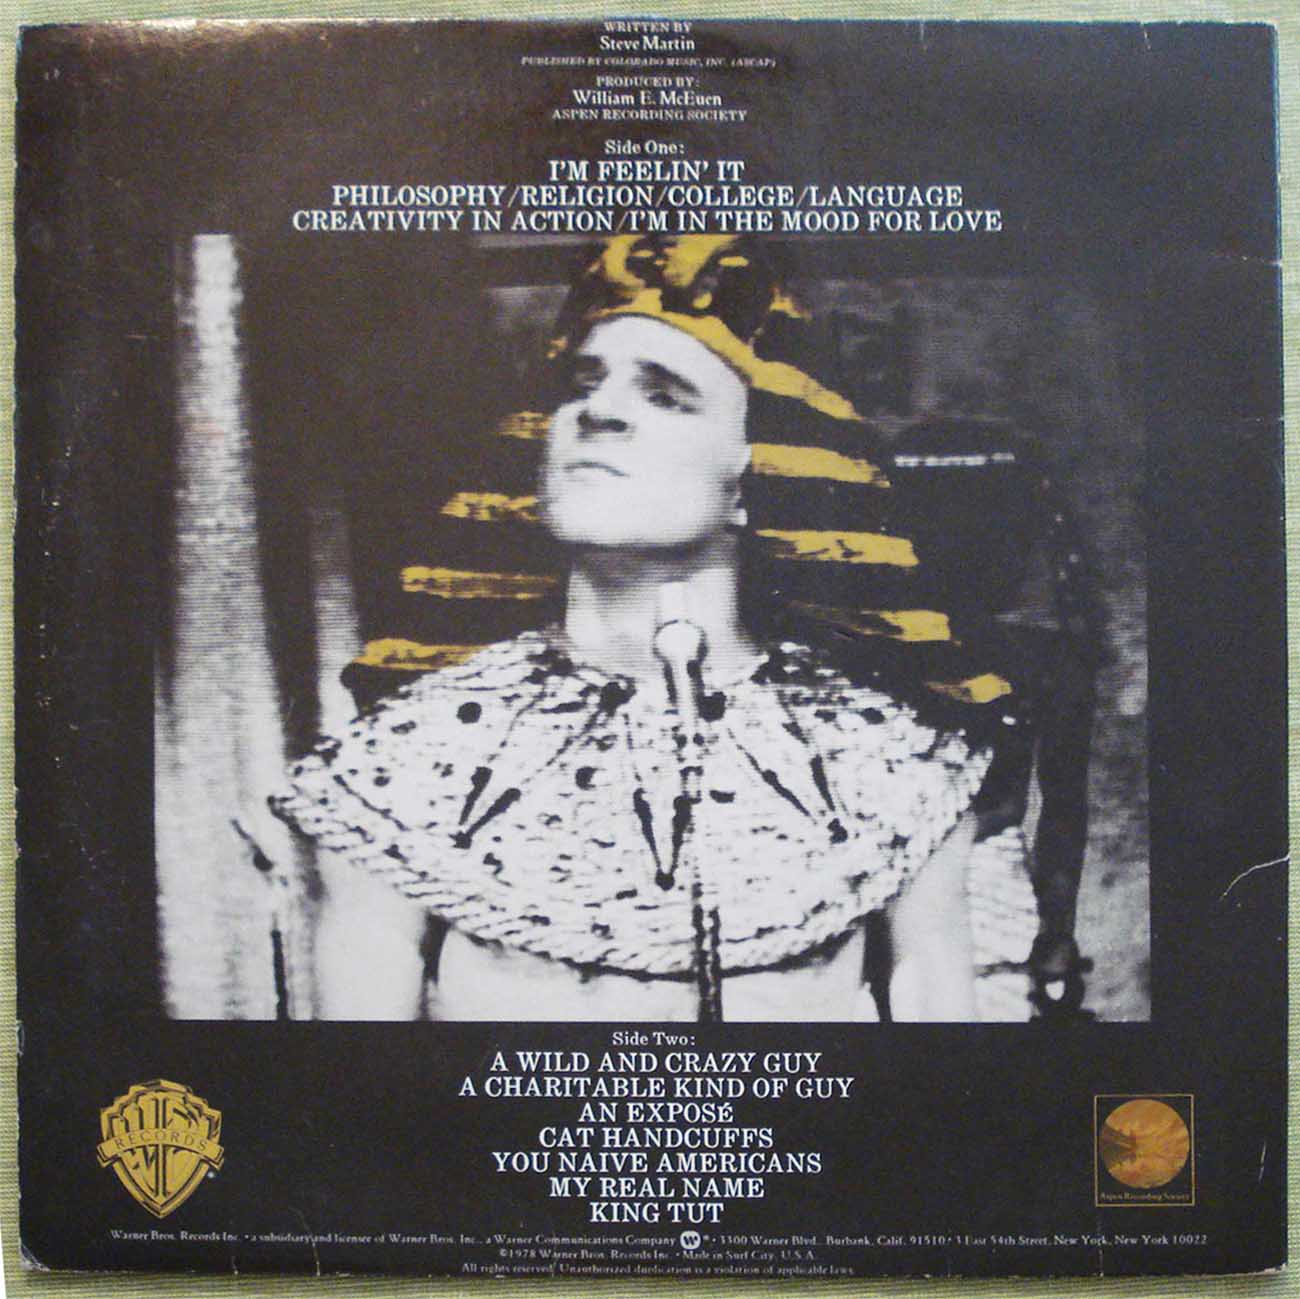 Steve Martin - A Wild and Crazy Guy (1981) Vinyl LP 33rpm HS3238